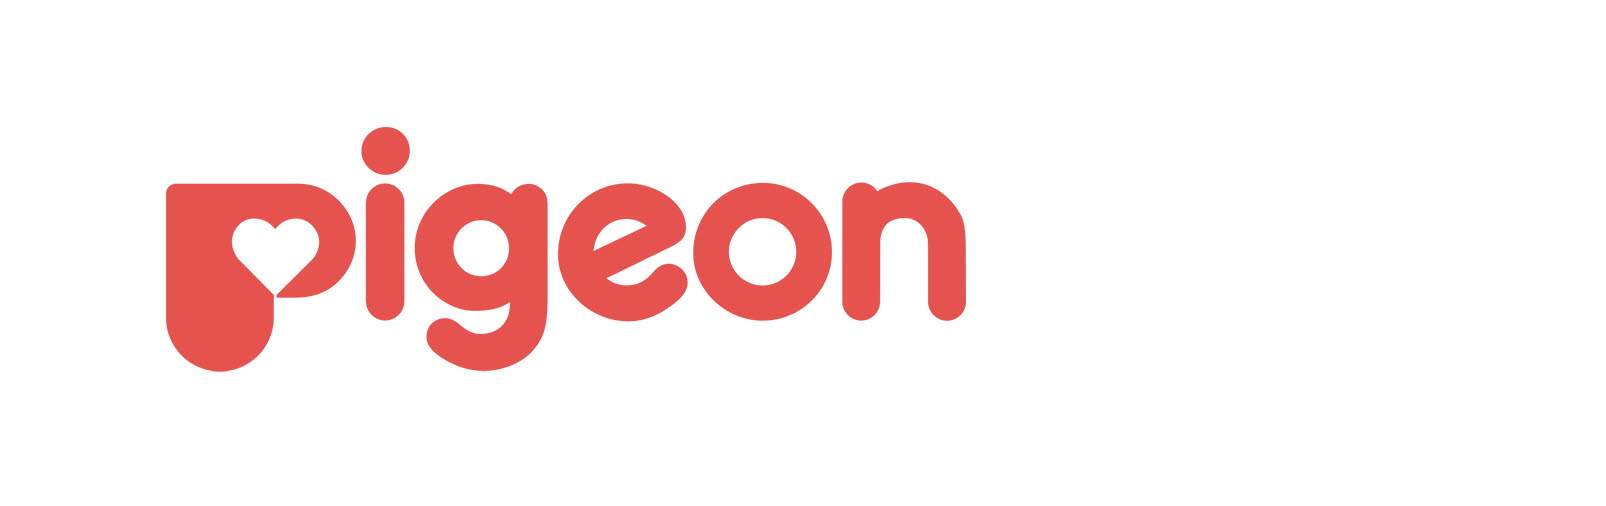 Customer logo Pigeon